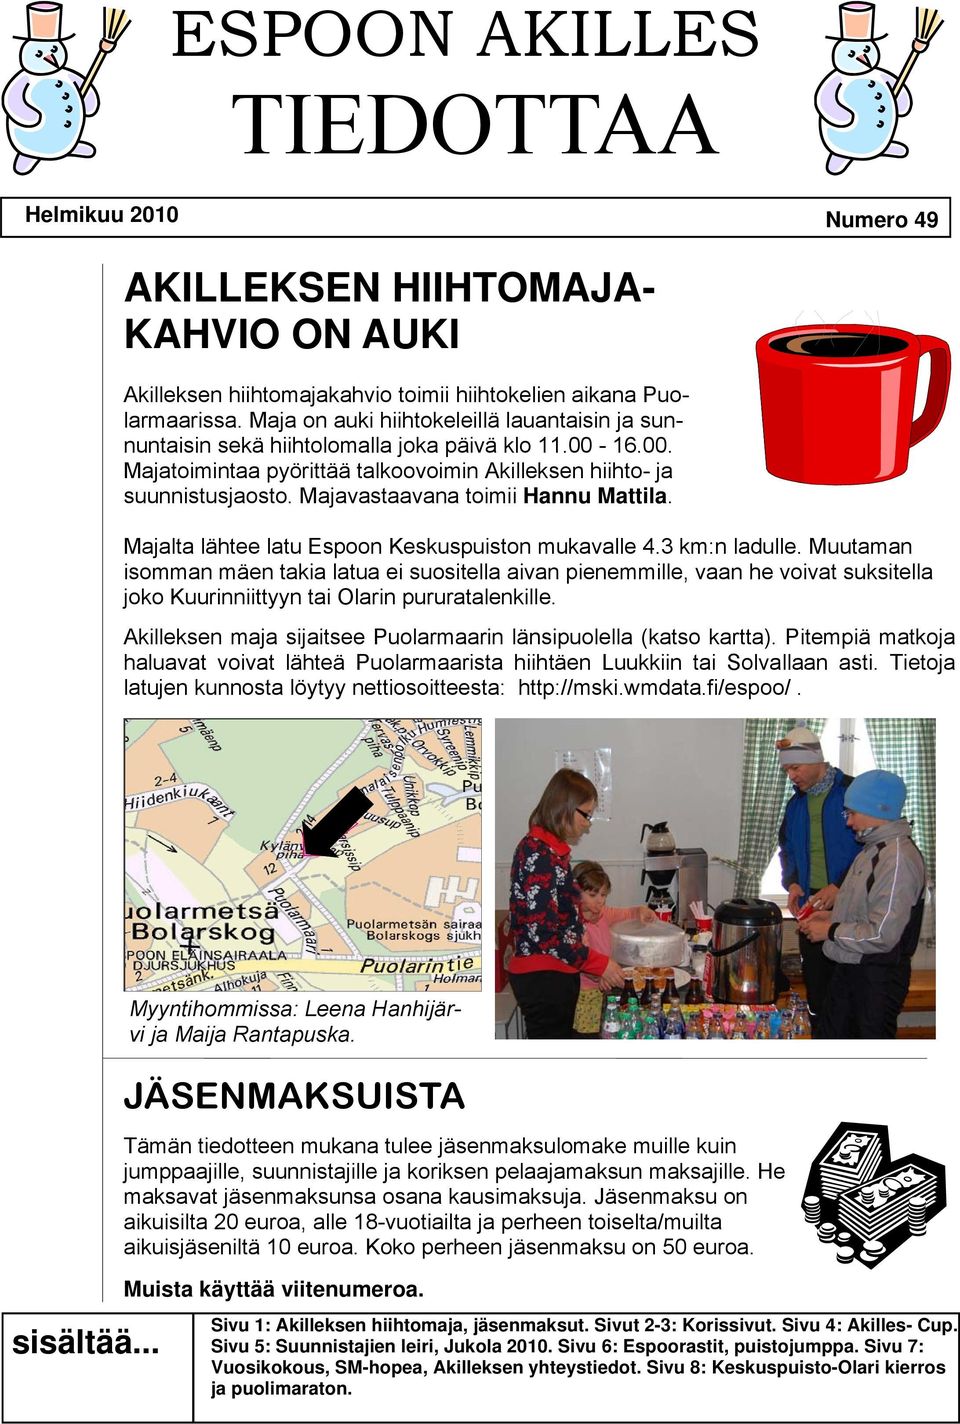 Majavastaavana toimii Hannu Mattila. Majalta lähtee latu Espoon Keskuspuiston mukavalle 4.3 km:n ladulle.